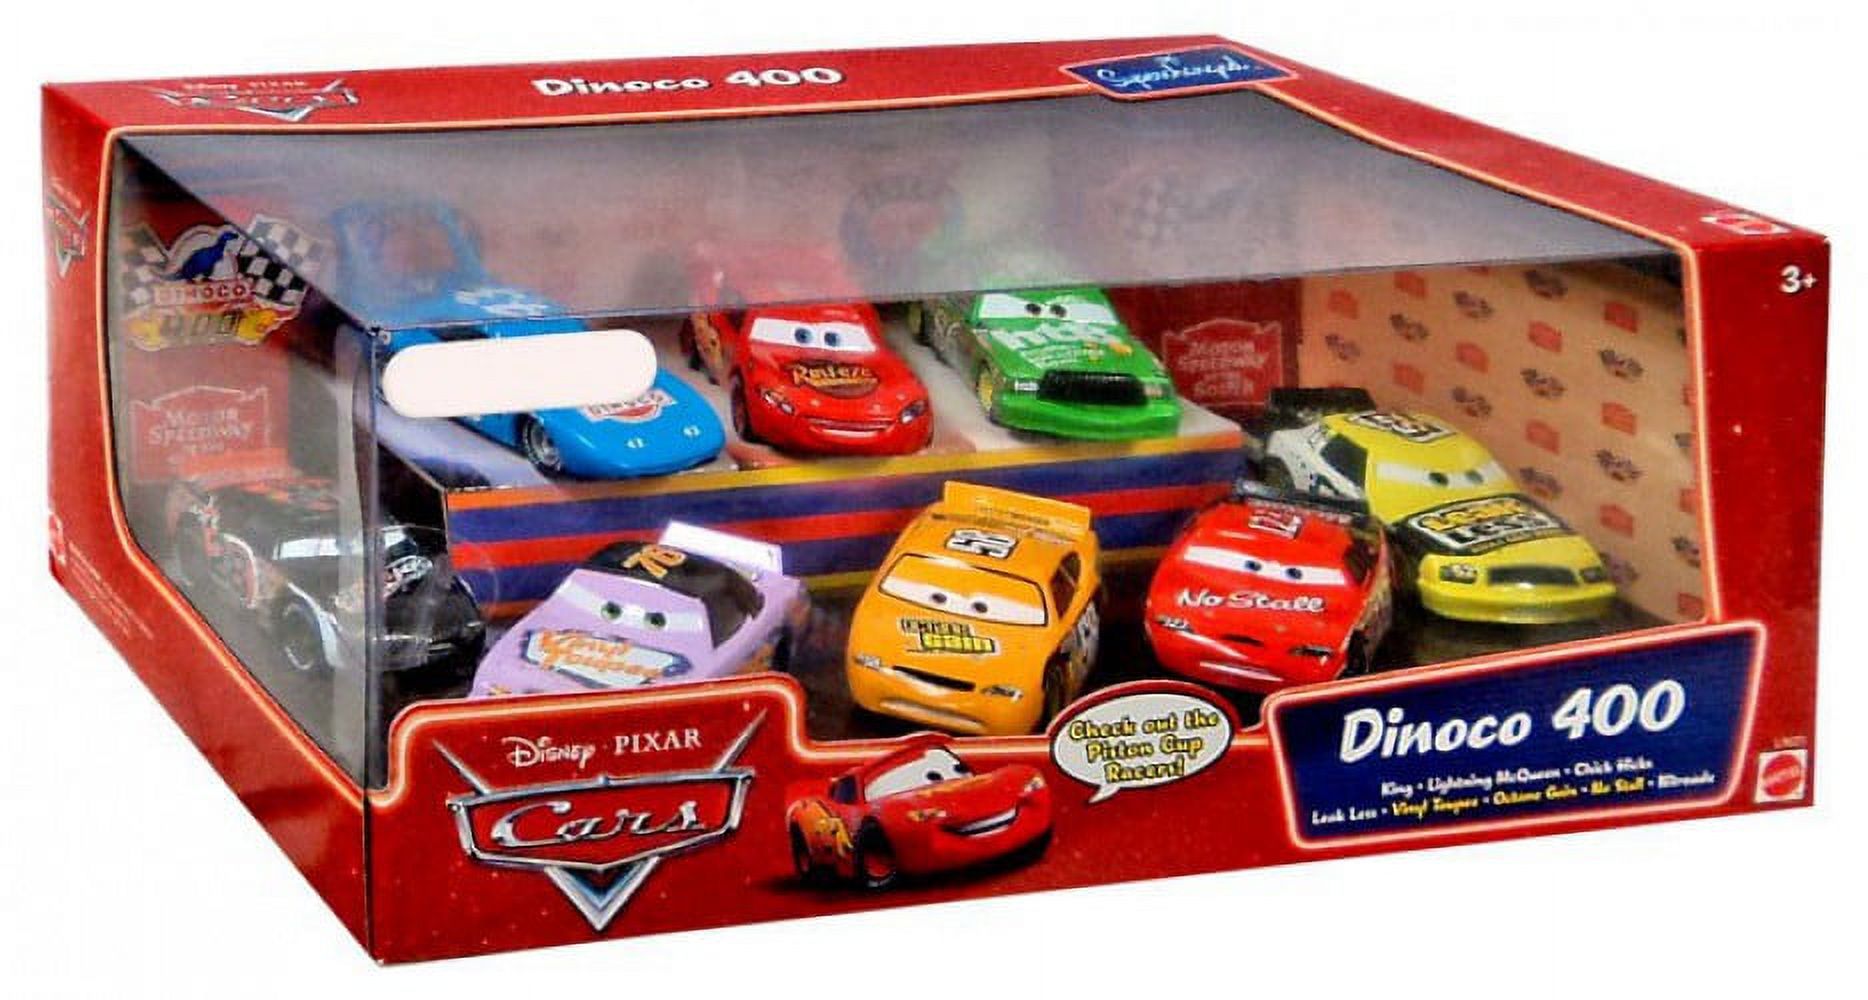 Disney Cars Multi-Packs Dinoco 400 Gift Pack Diecast Car Set - image 1 of 2